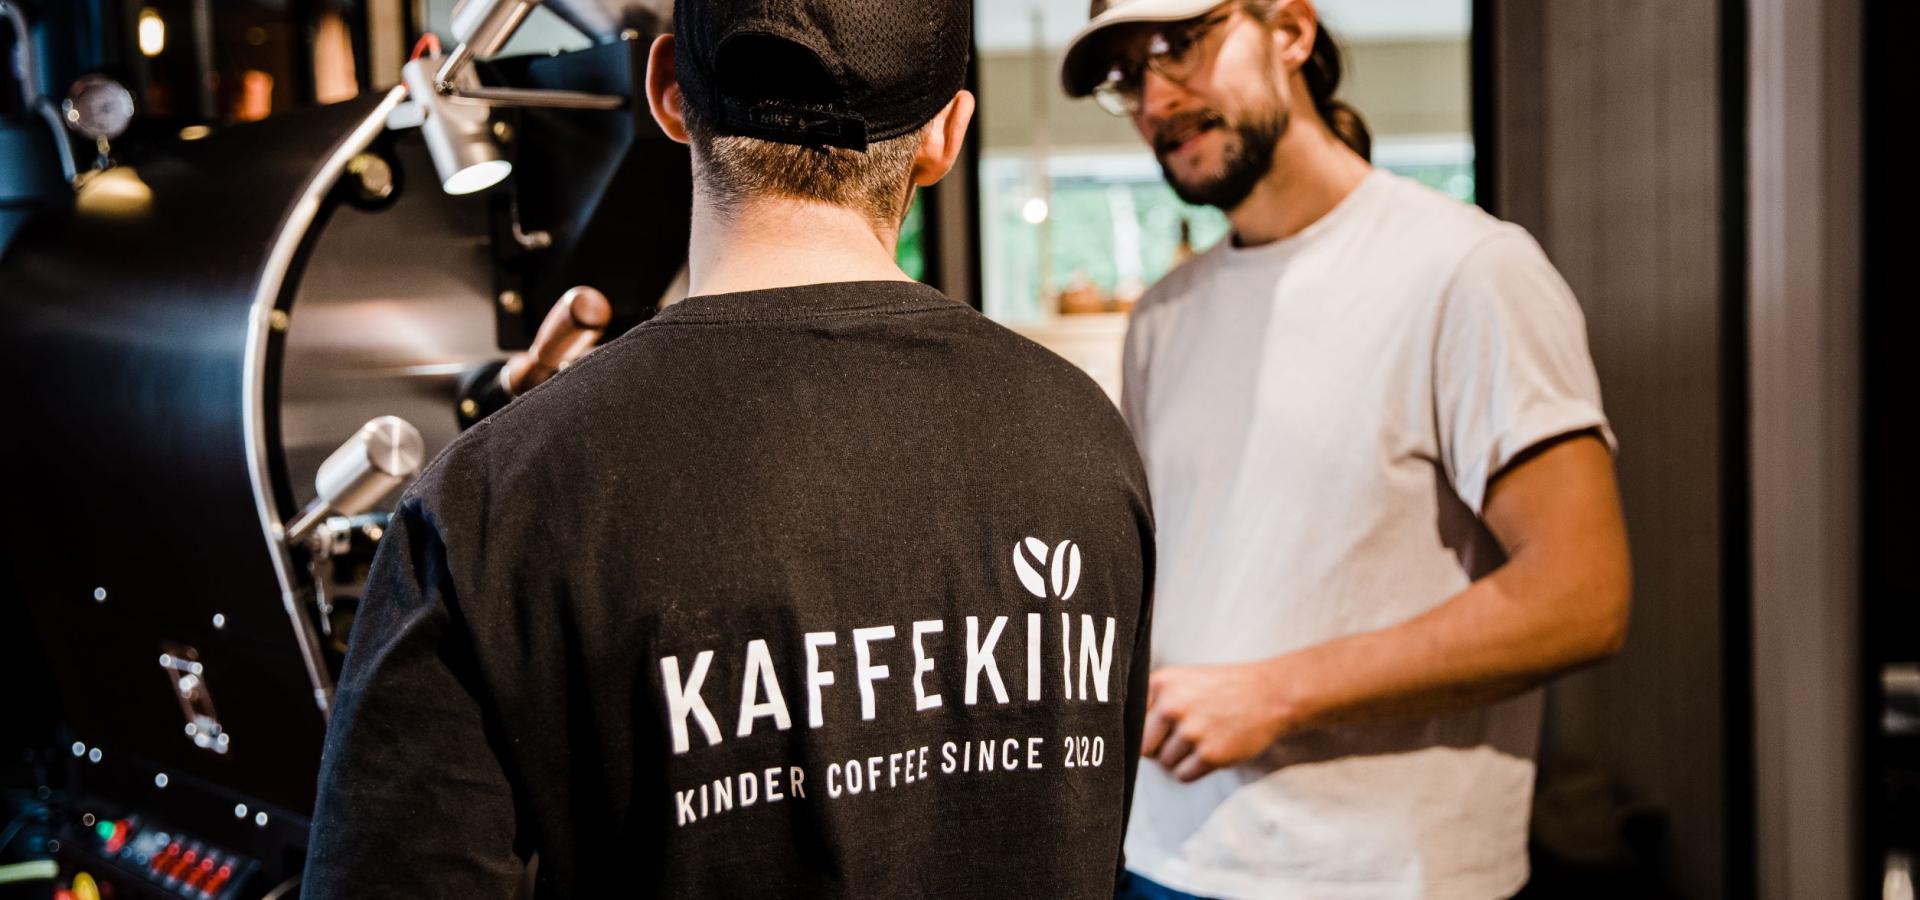 Kaffekiin cafe and coffebrewery in Storslett